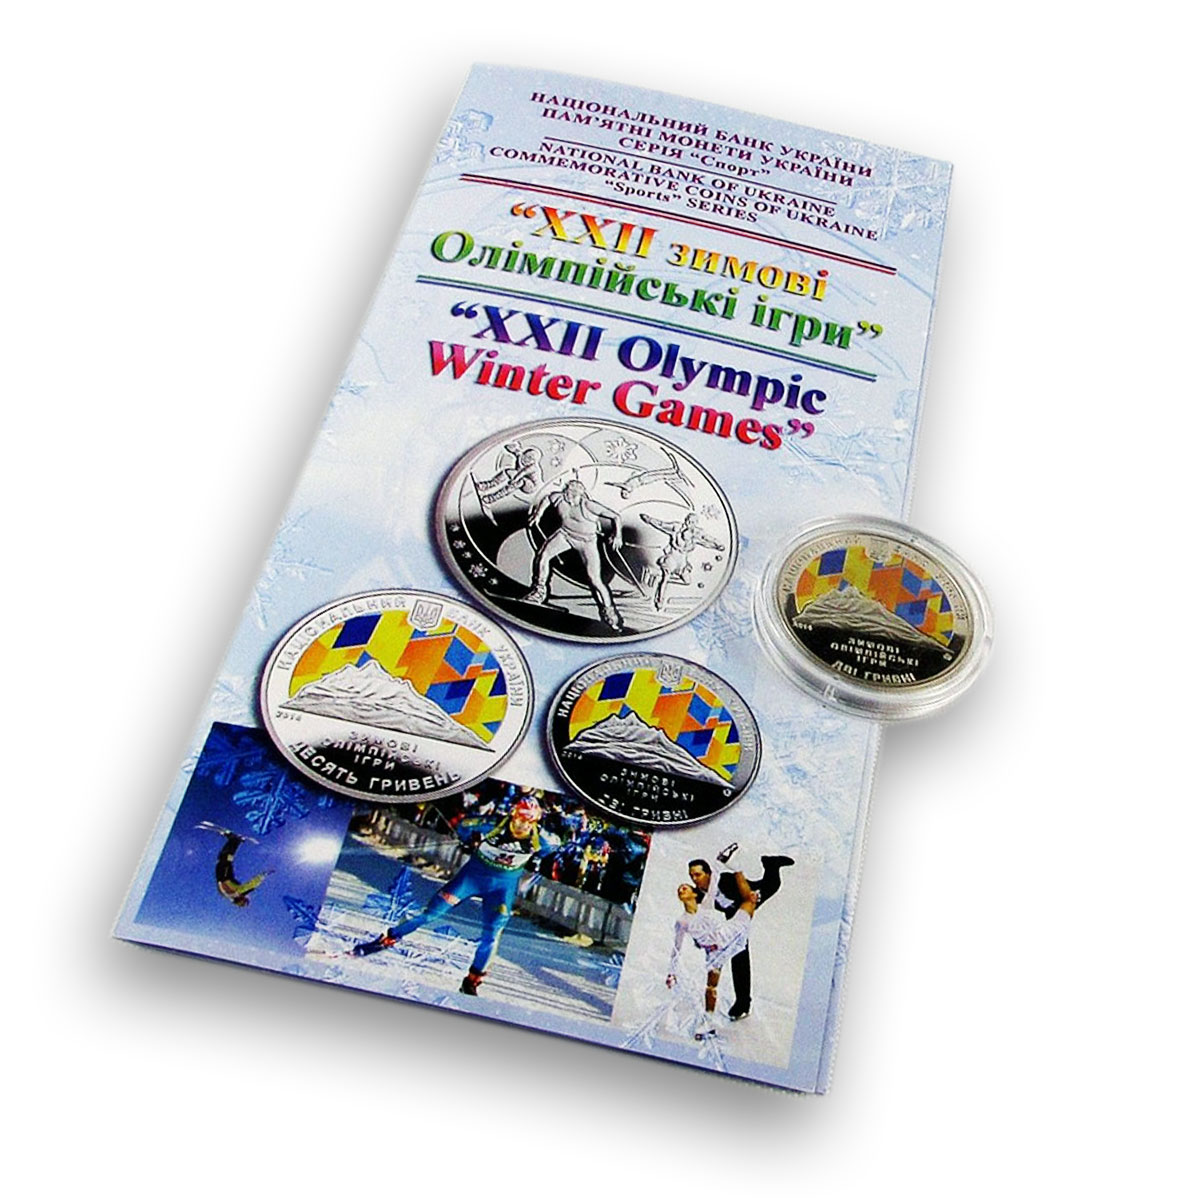 Ukraine 2 hryvnia XXII Winter Olympic Games Sochi sport colored nickel coin 2014